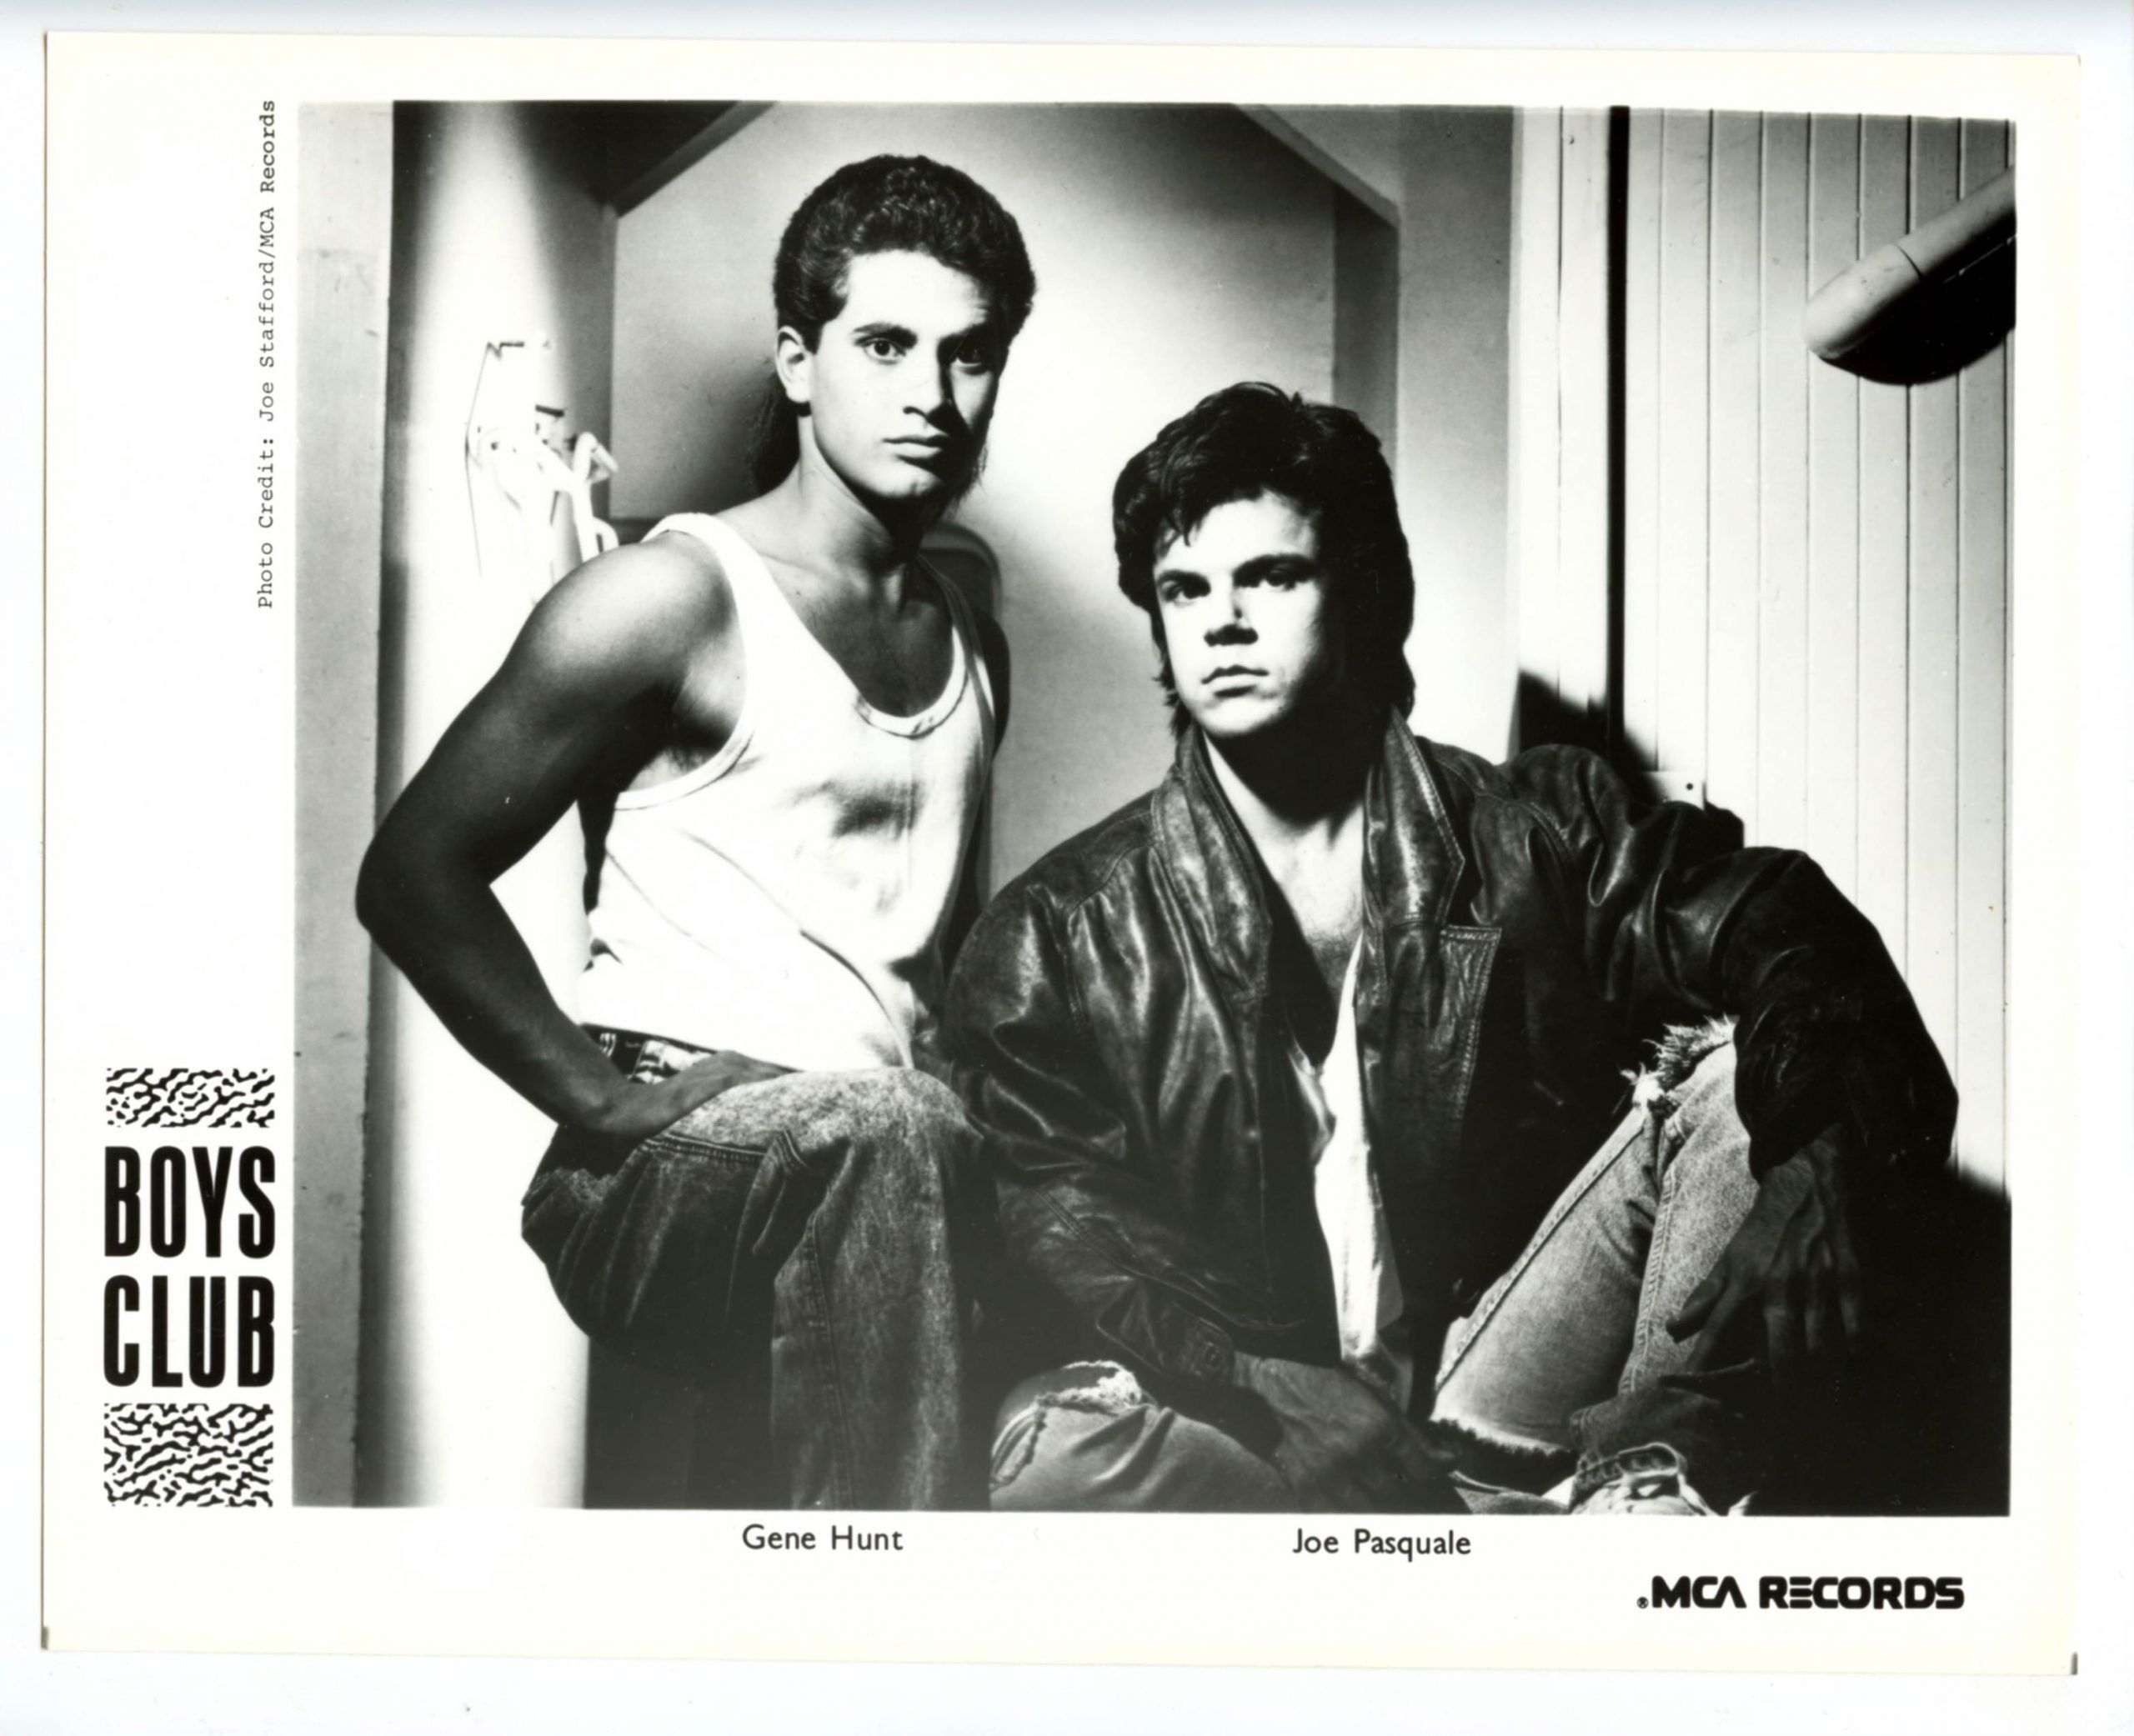 Boys Club Photo 1988 MCA Records